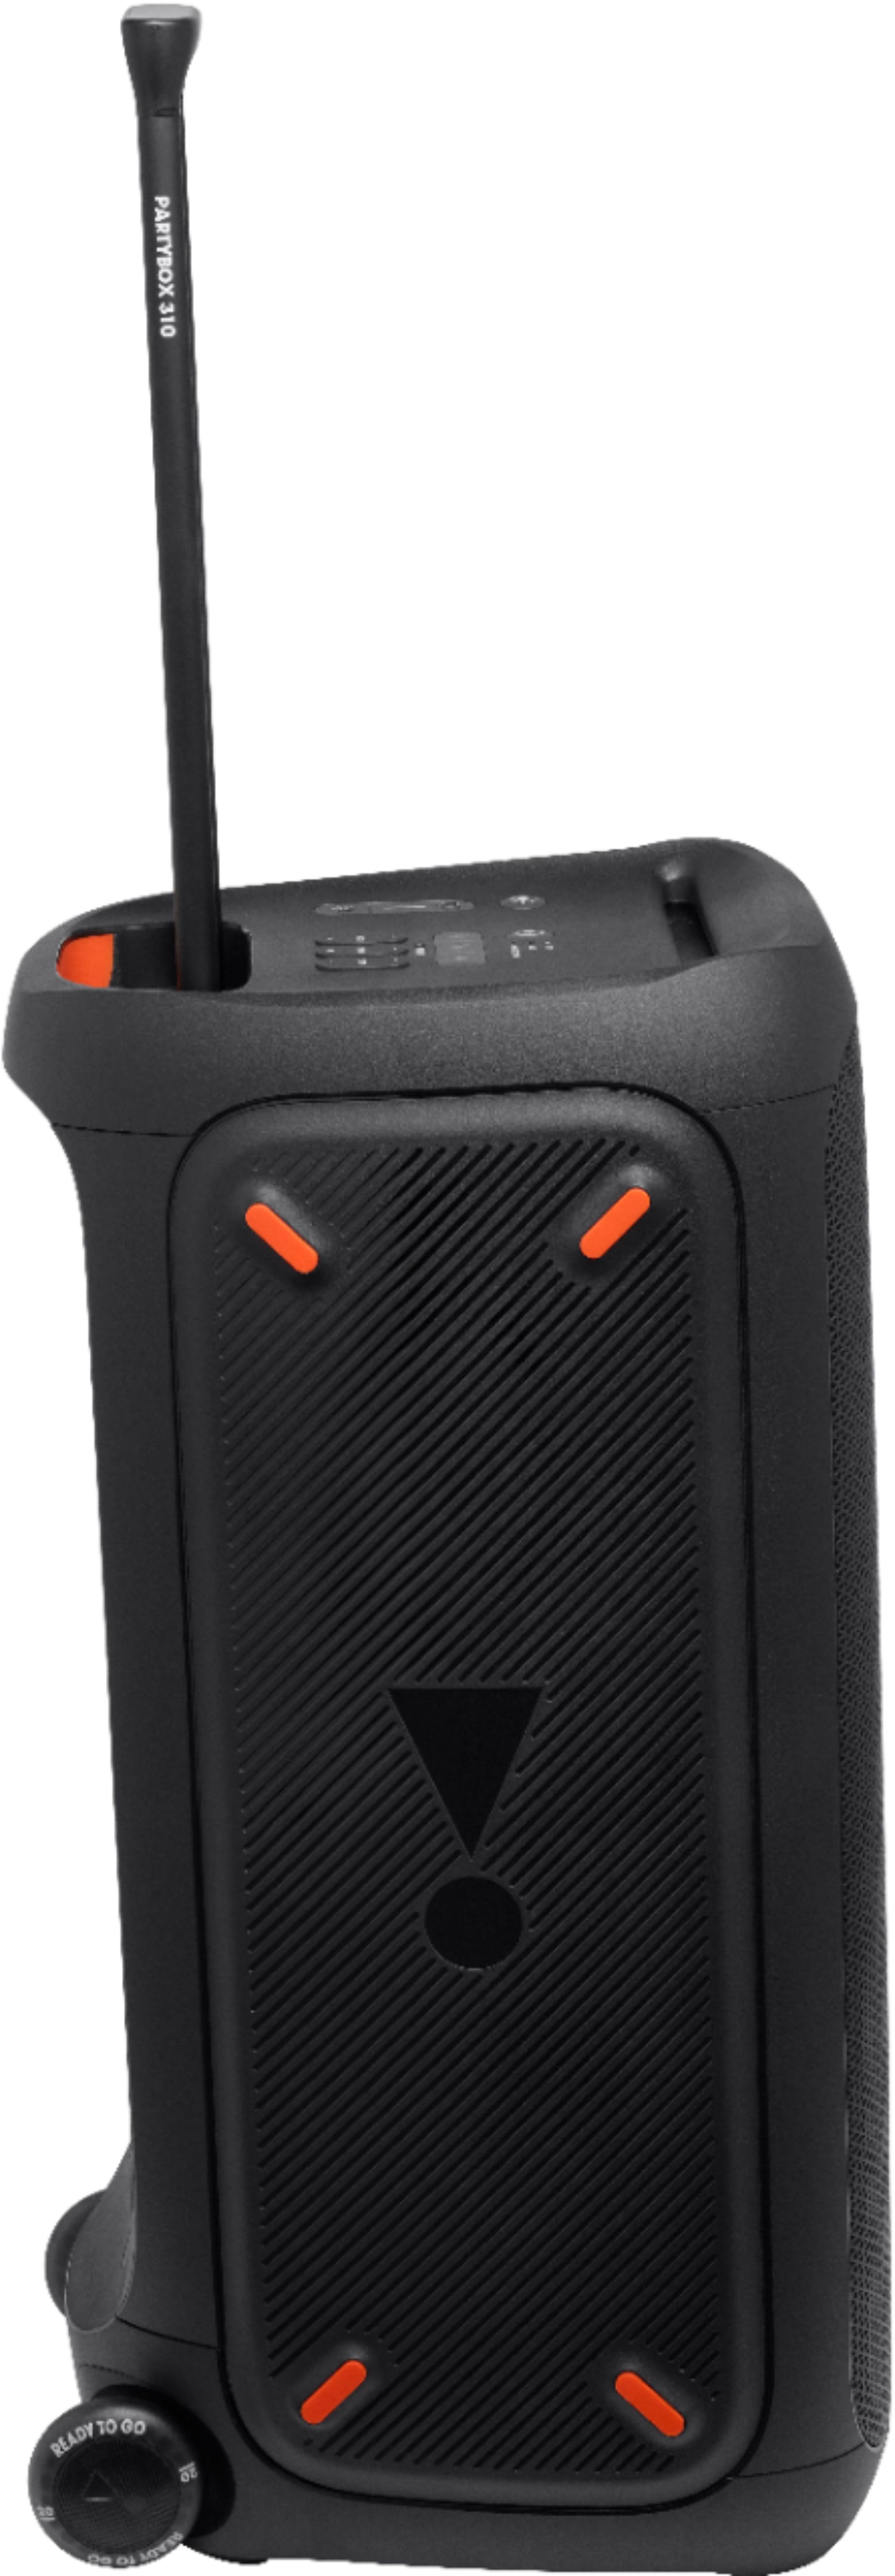 Behoefte aan alleen vochtigheid JBL PartyBox 310 Portable Party Speaker Black JBLPARTYBOX310AM - Best Buy